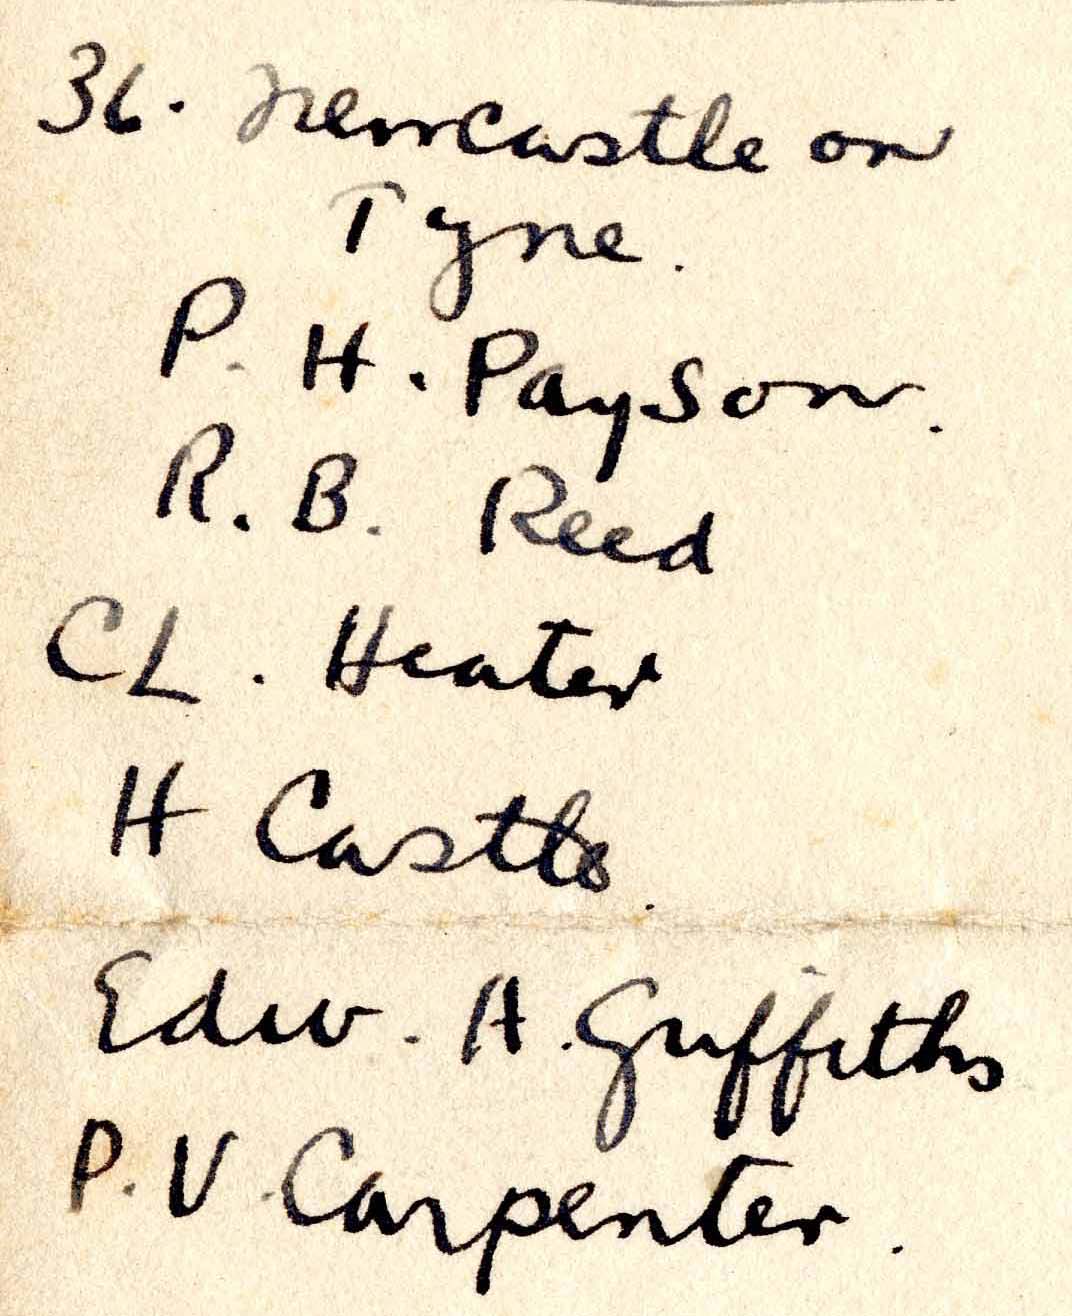 A handwritten list of names headed "36. Newcastle on Tyne."